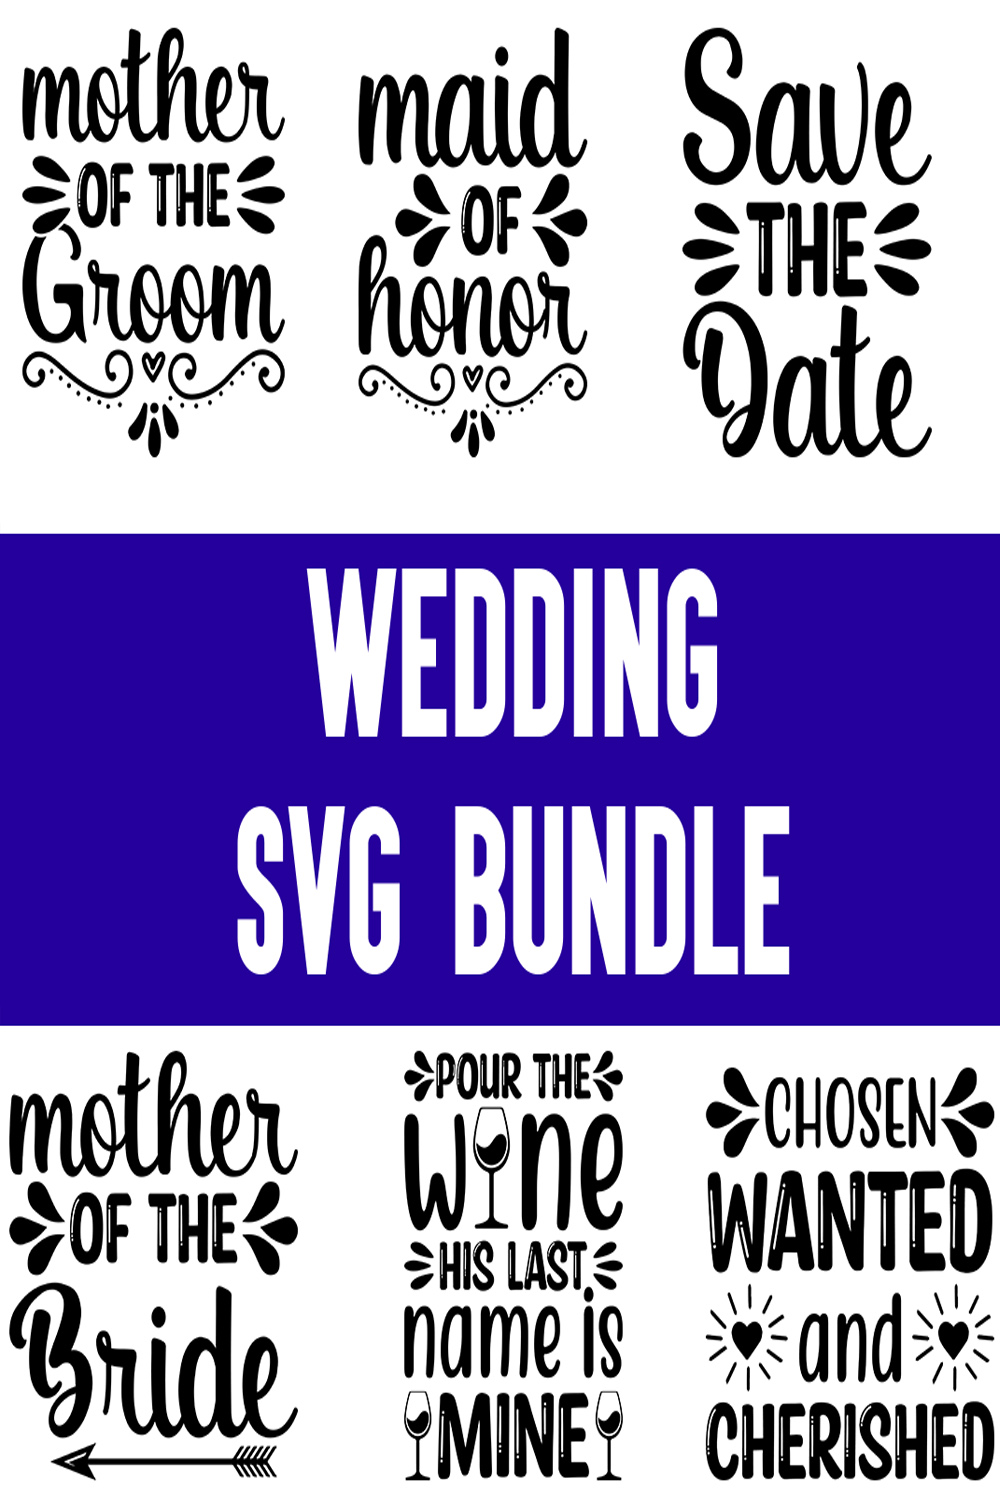 Wedding SVG Bundle pinterest preview image.